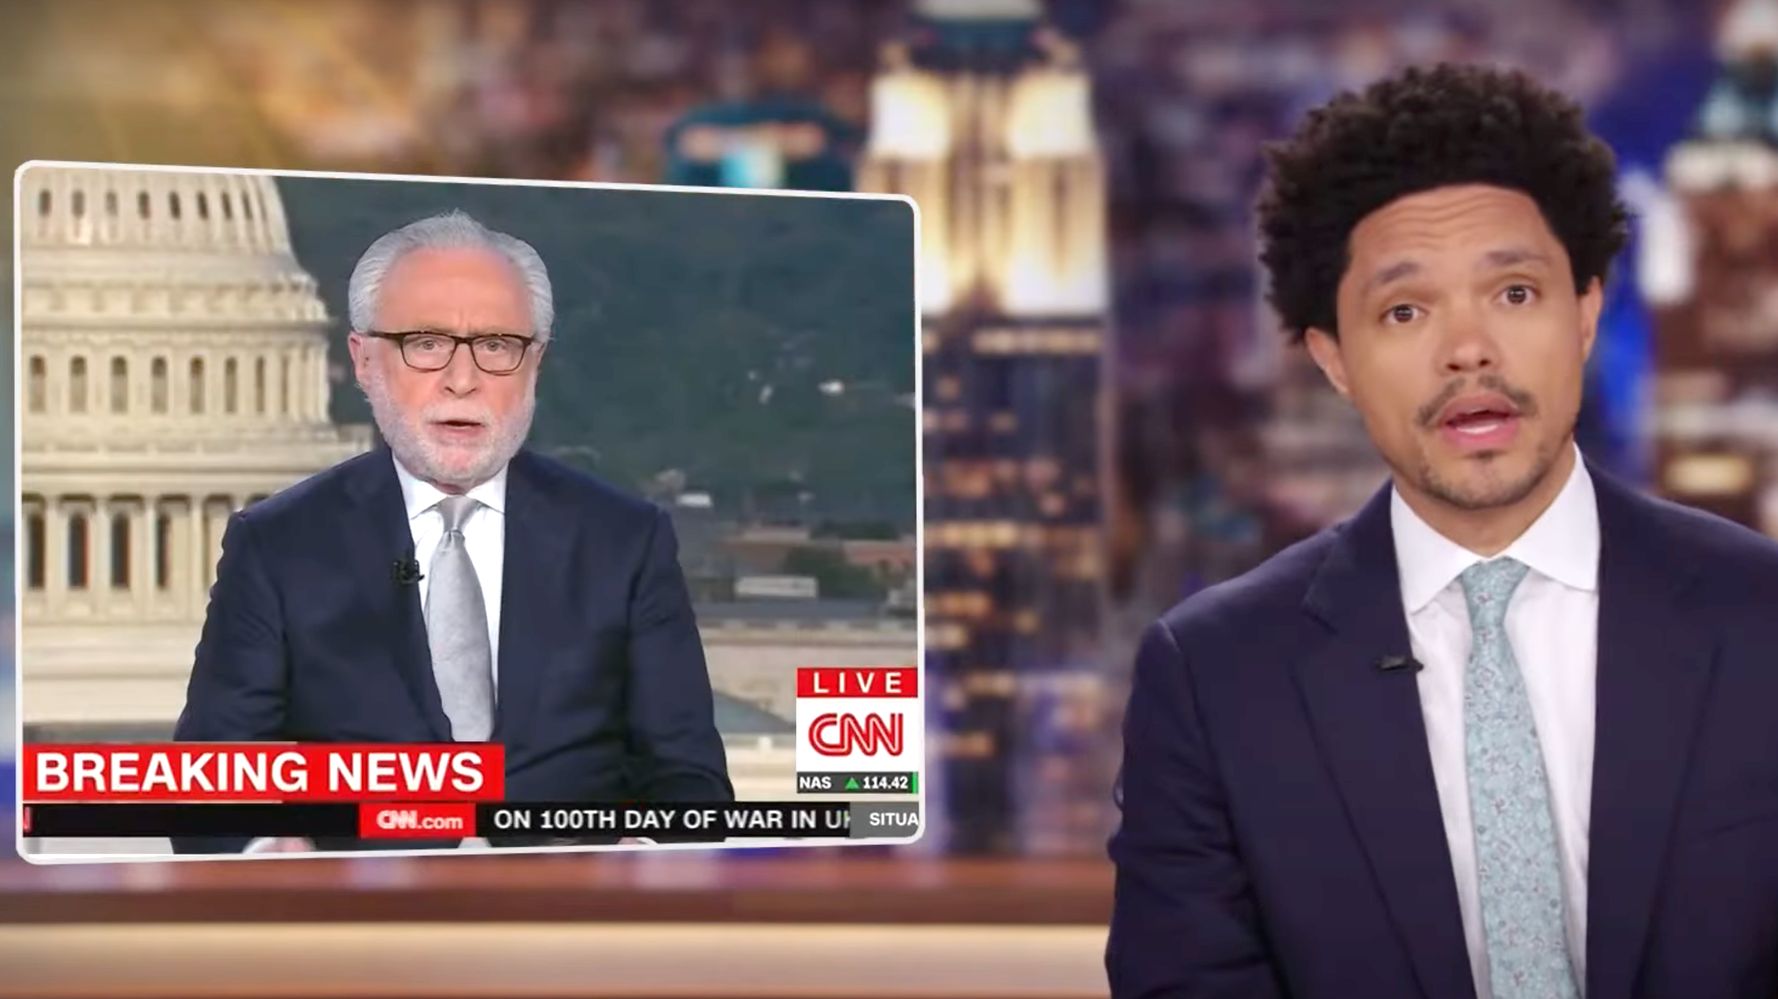 Trevor Noah Roasts CNN For Overusing Breaking News Alerts: 'Boy Who Cried Wolf'